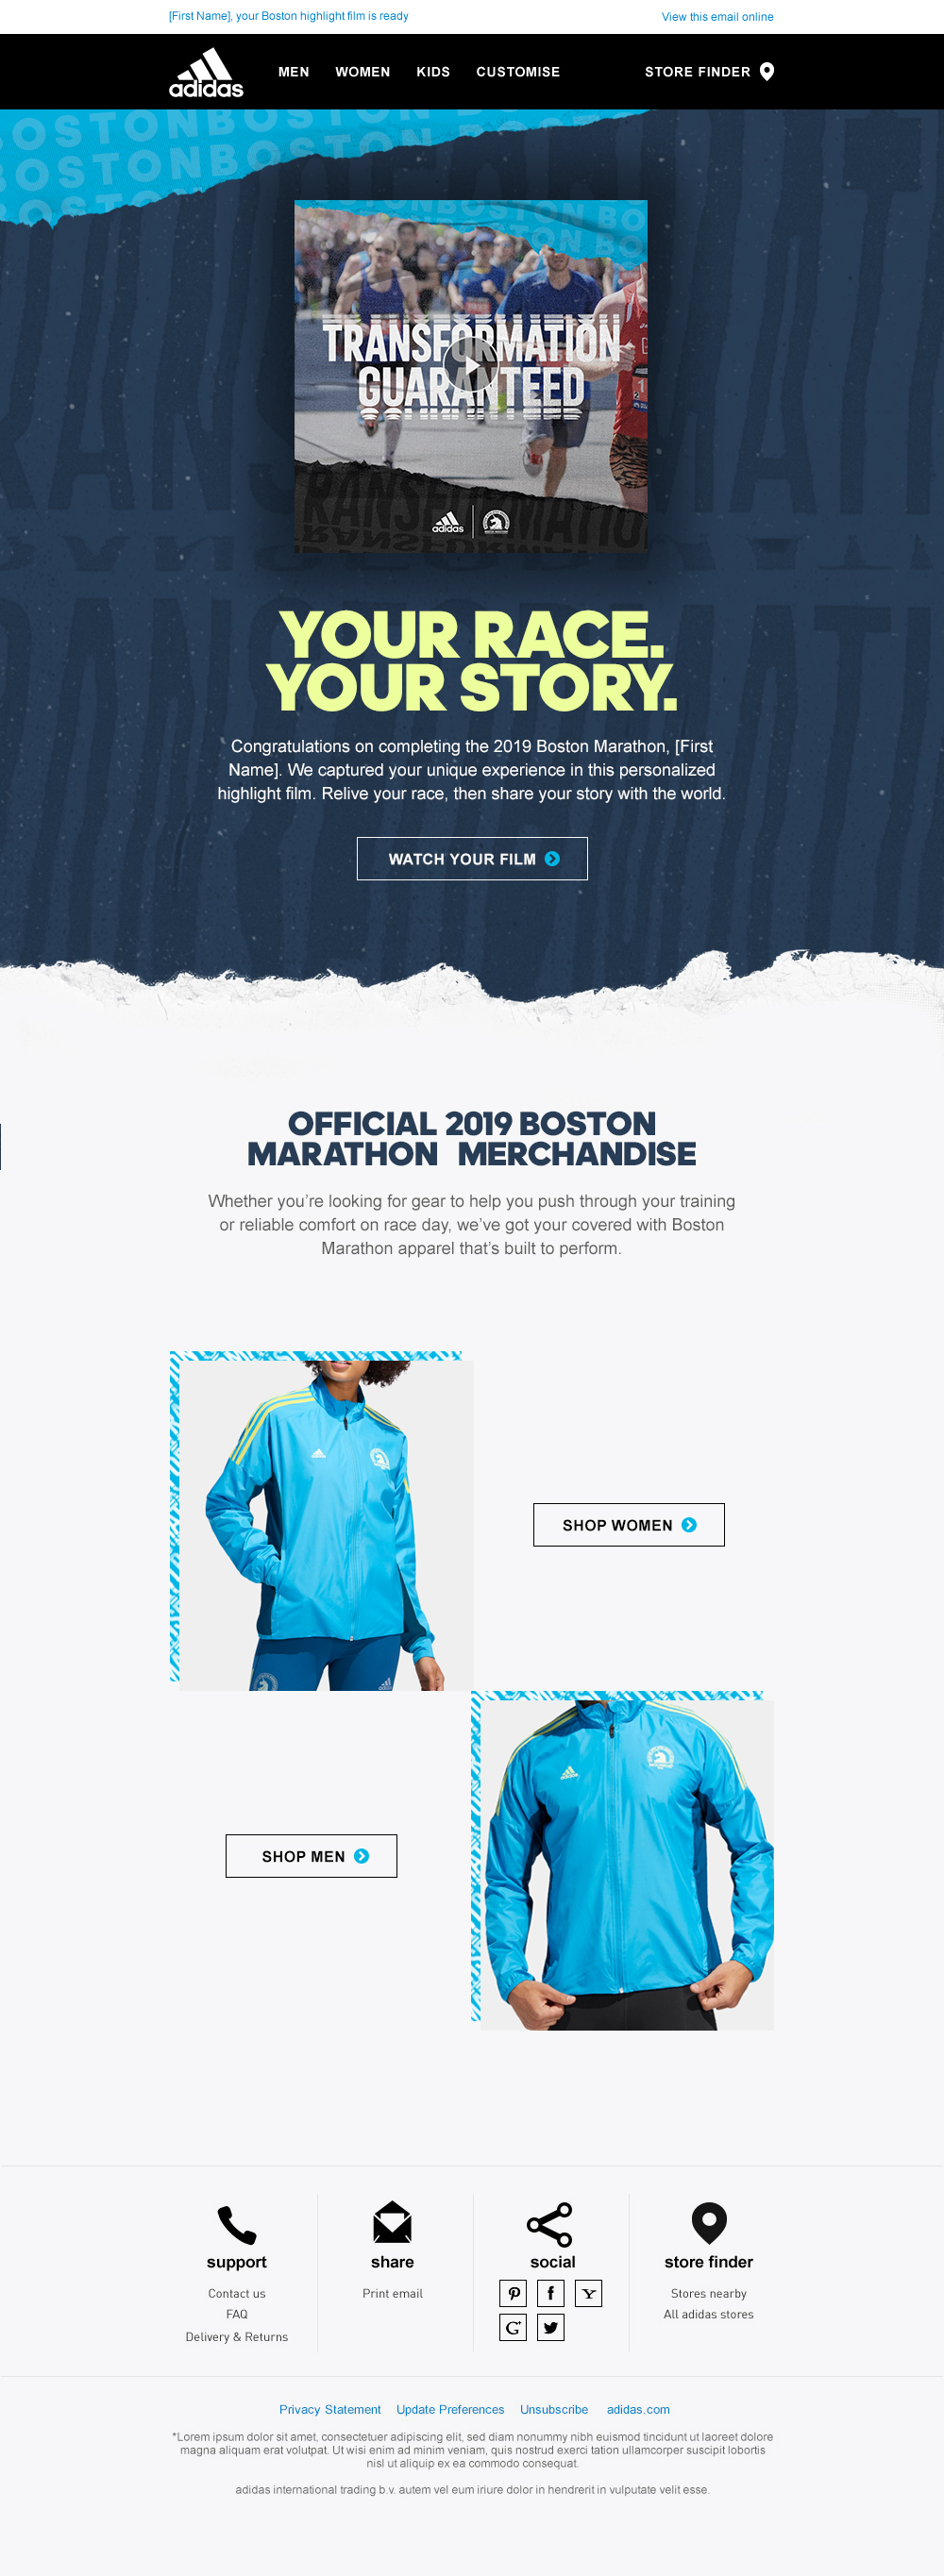 adidas_boston-marathon_email.jpg